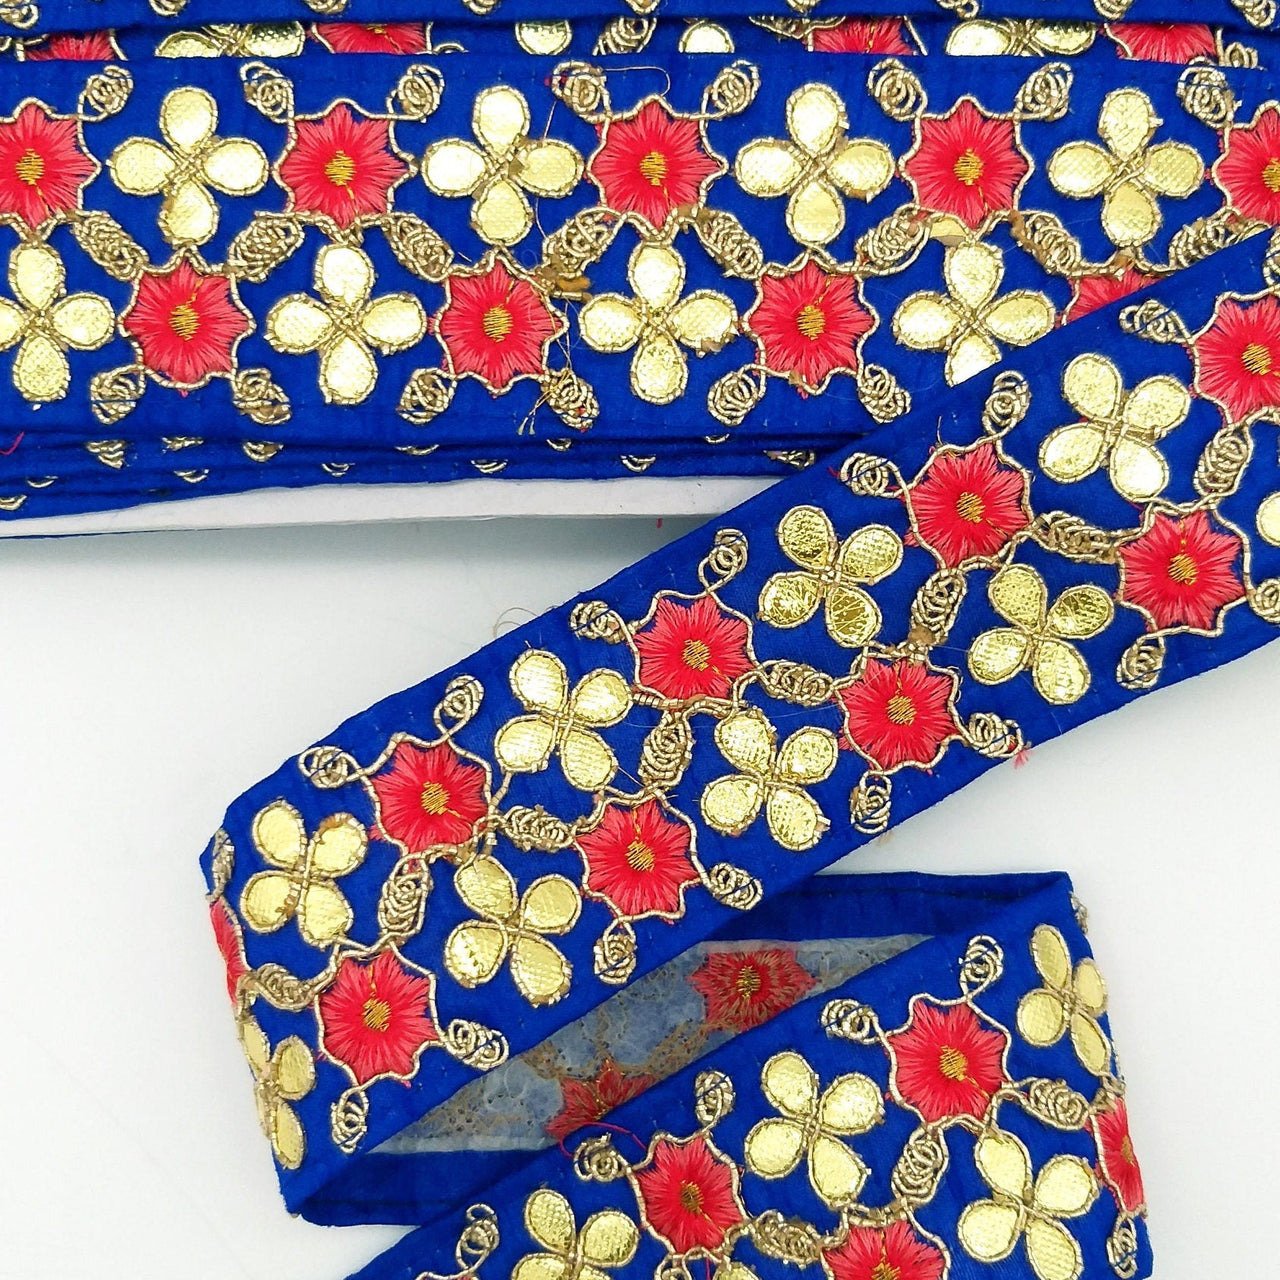 Royal Blue Art Silk Fabric Trim, Salmon Pink & Gold Floral Embroidery Gota Patti Indian Sari Border Trim By Yard Decorative Trim Craft Lace